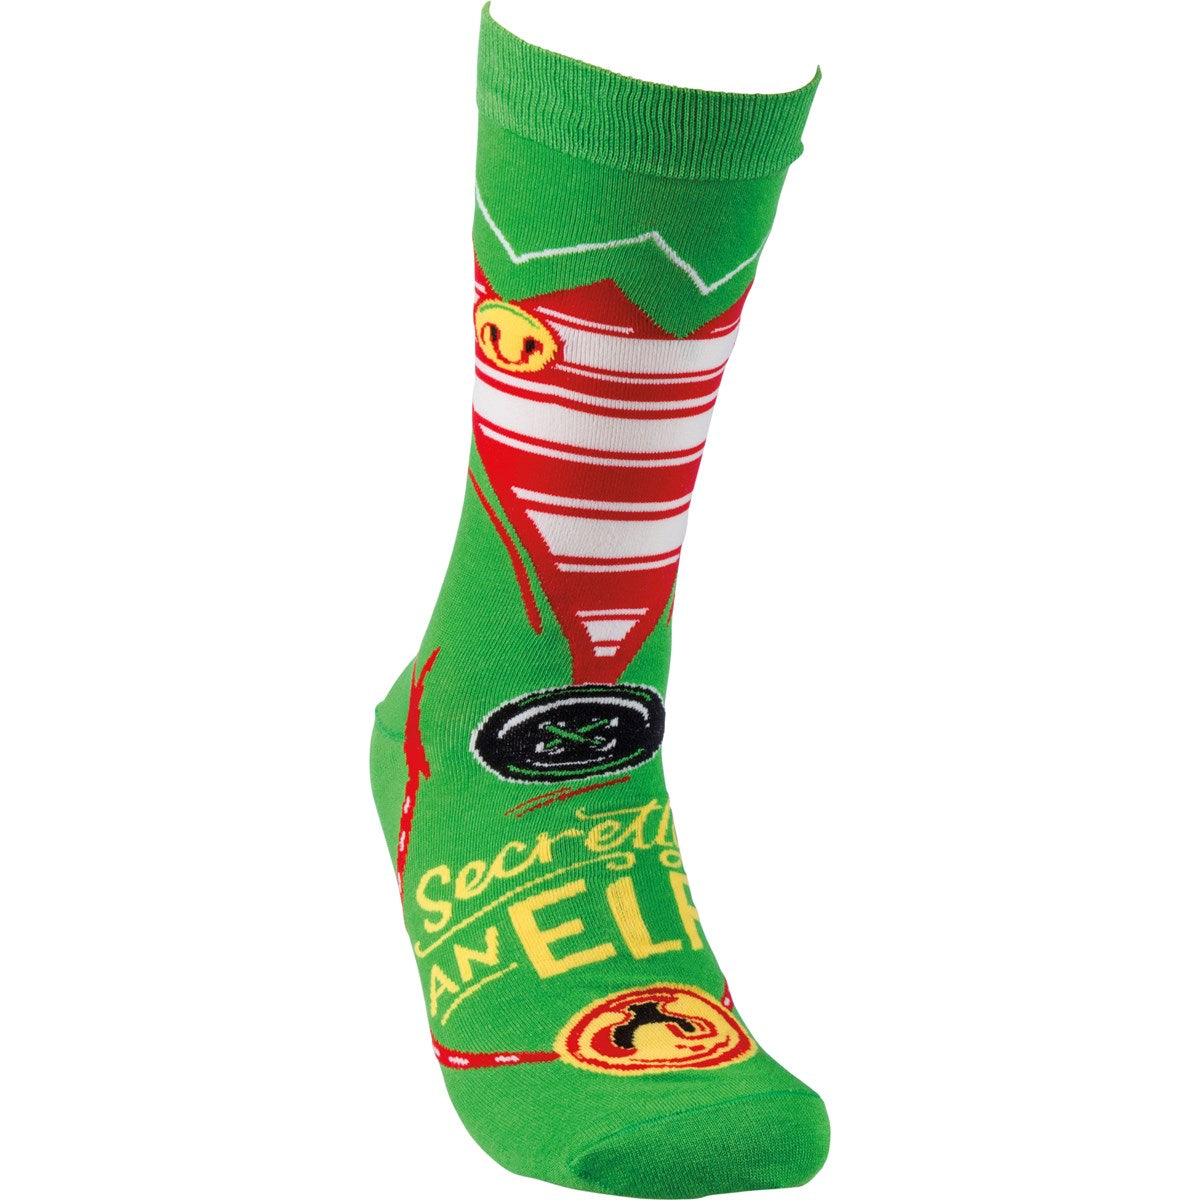 Secretly An Elf Fun Christmas Socks